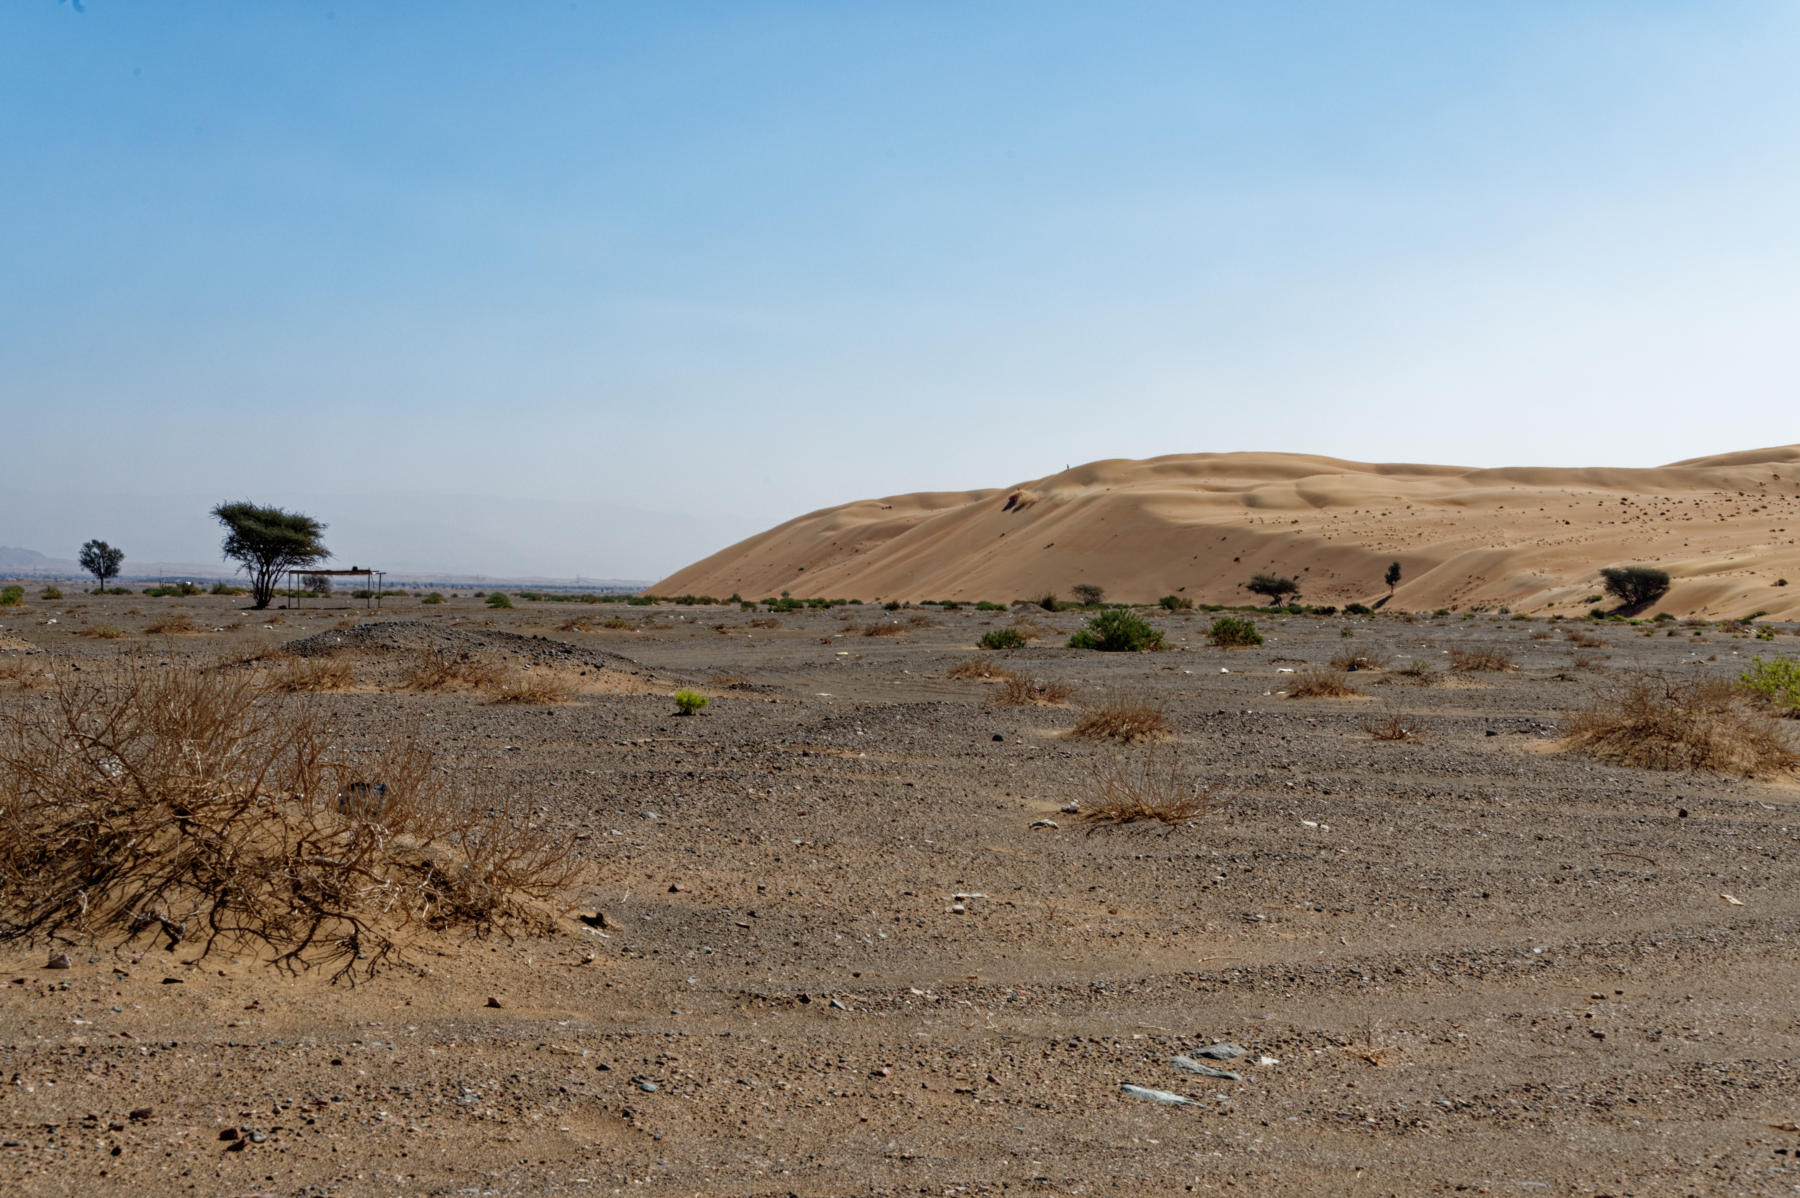 Abrupt start to the Oman desert